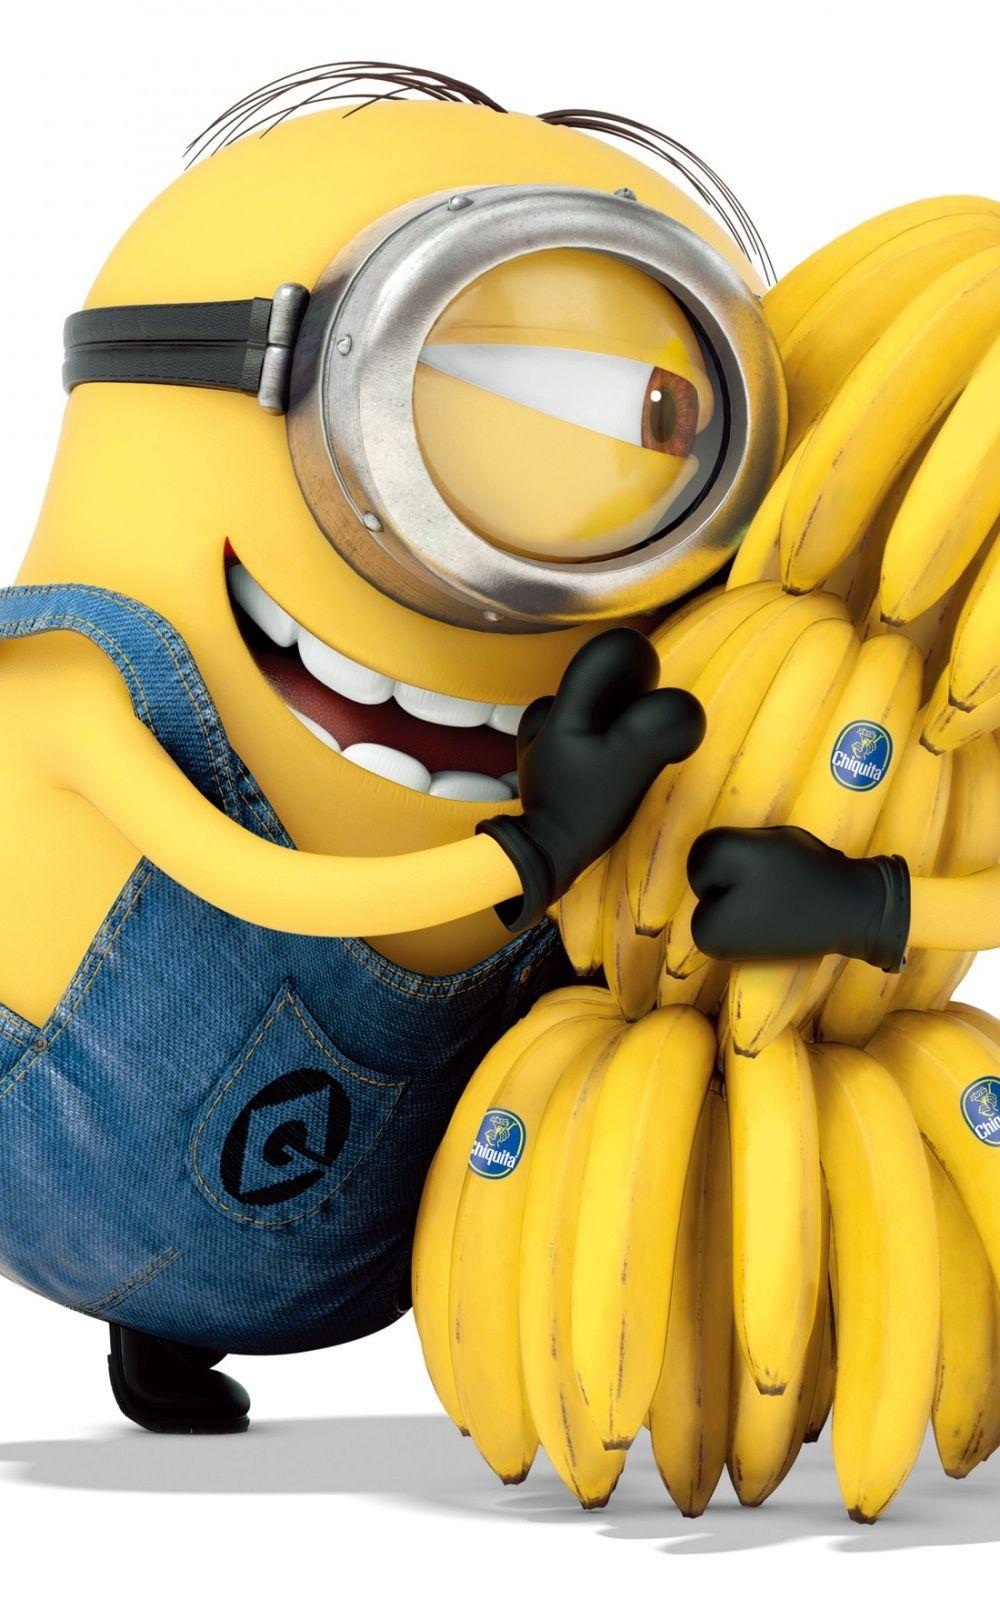 Me Minion Hugging Bananas Android Wallpaper free download